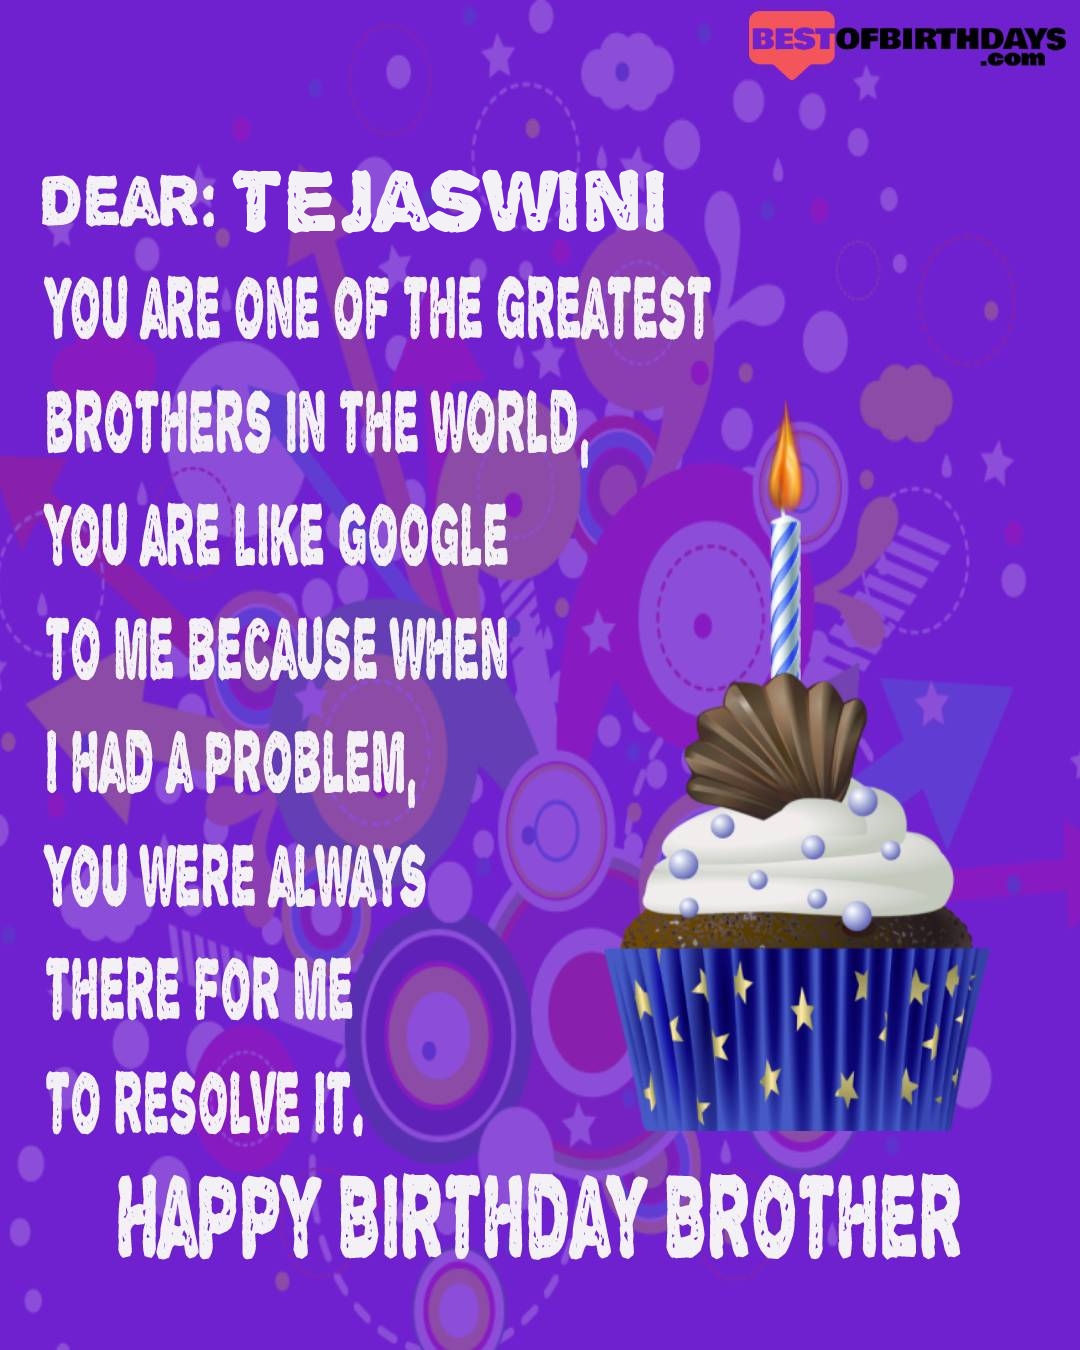 Happy birthday tejaswini bhai brother bro